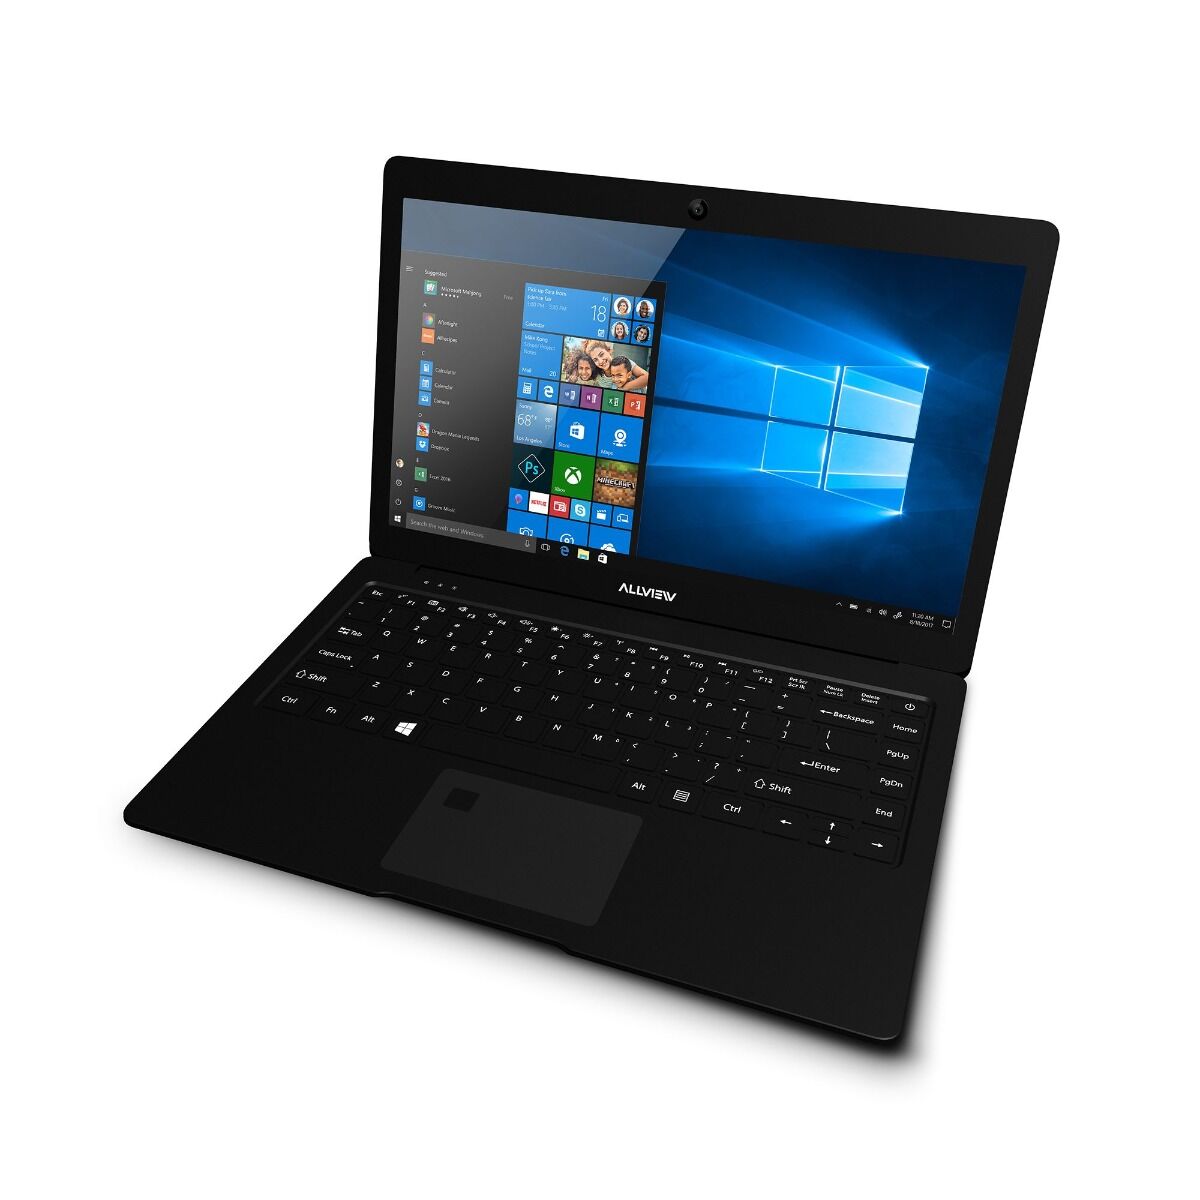 Laptop Allview Allbook X cu procesor intel Celeron Quad-Core N3450 pana la 2.2GHz, 13,3